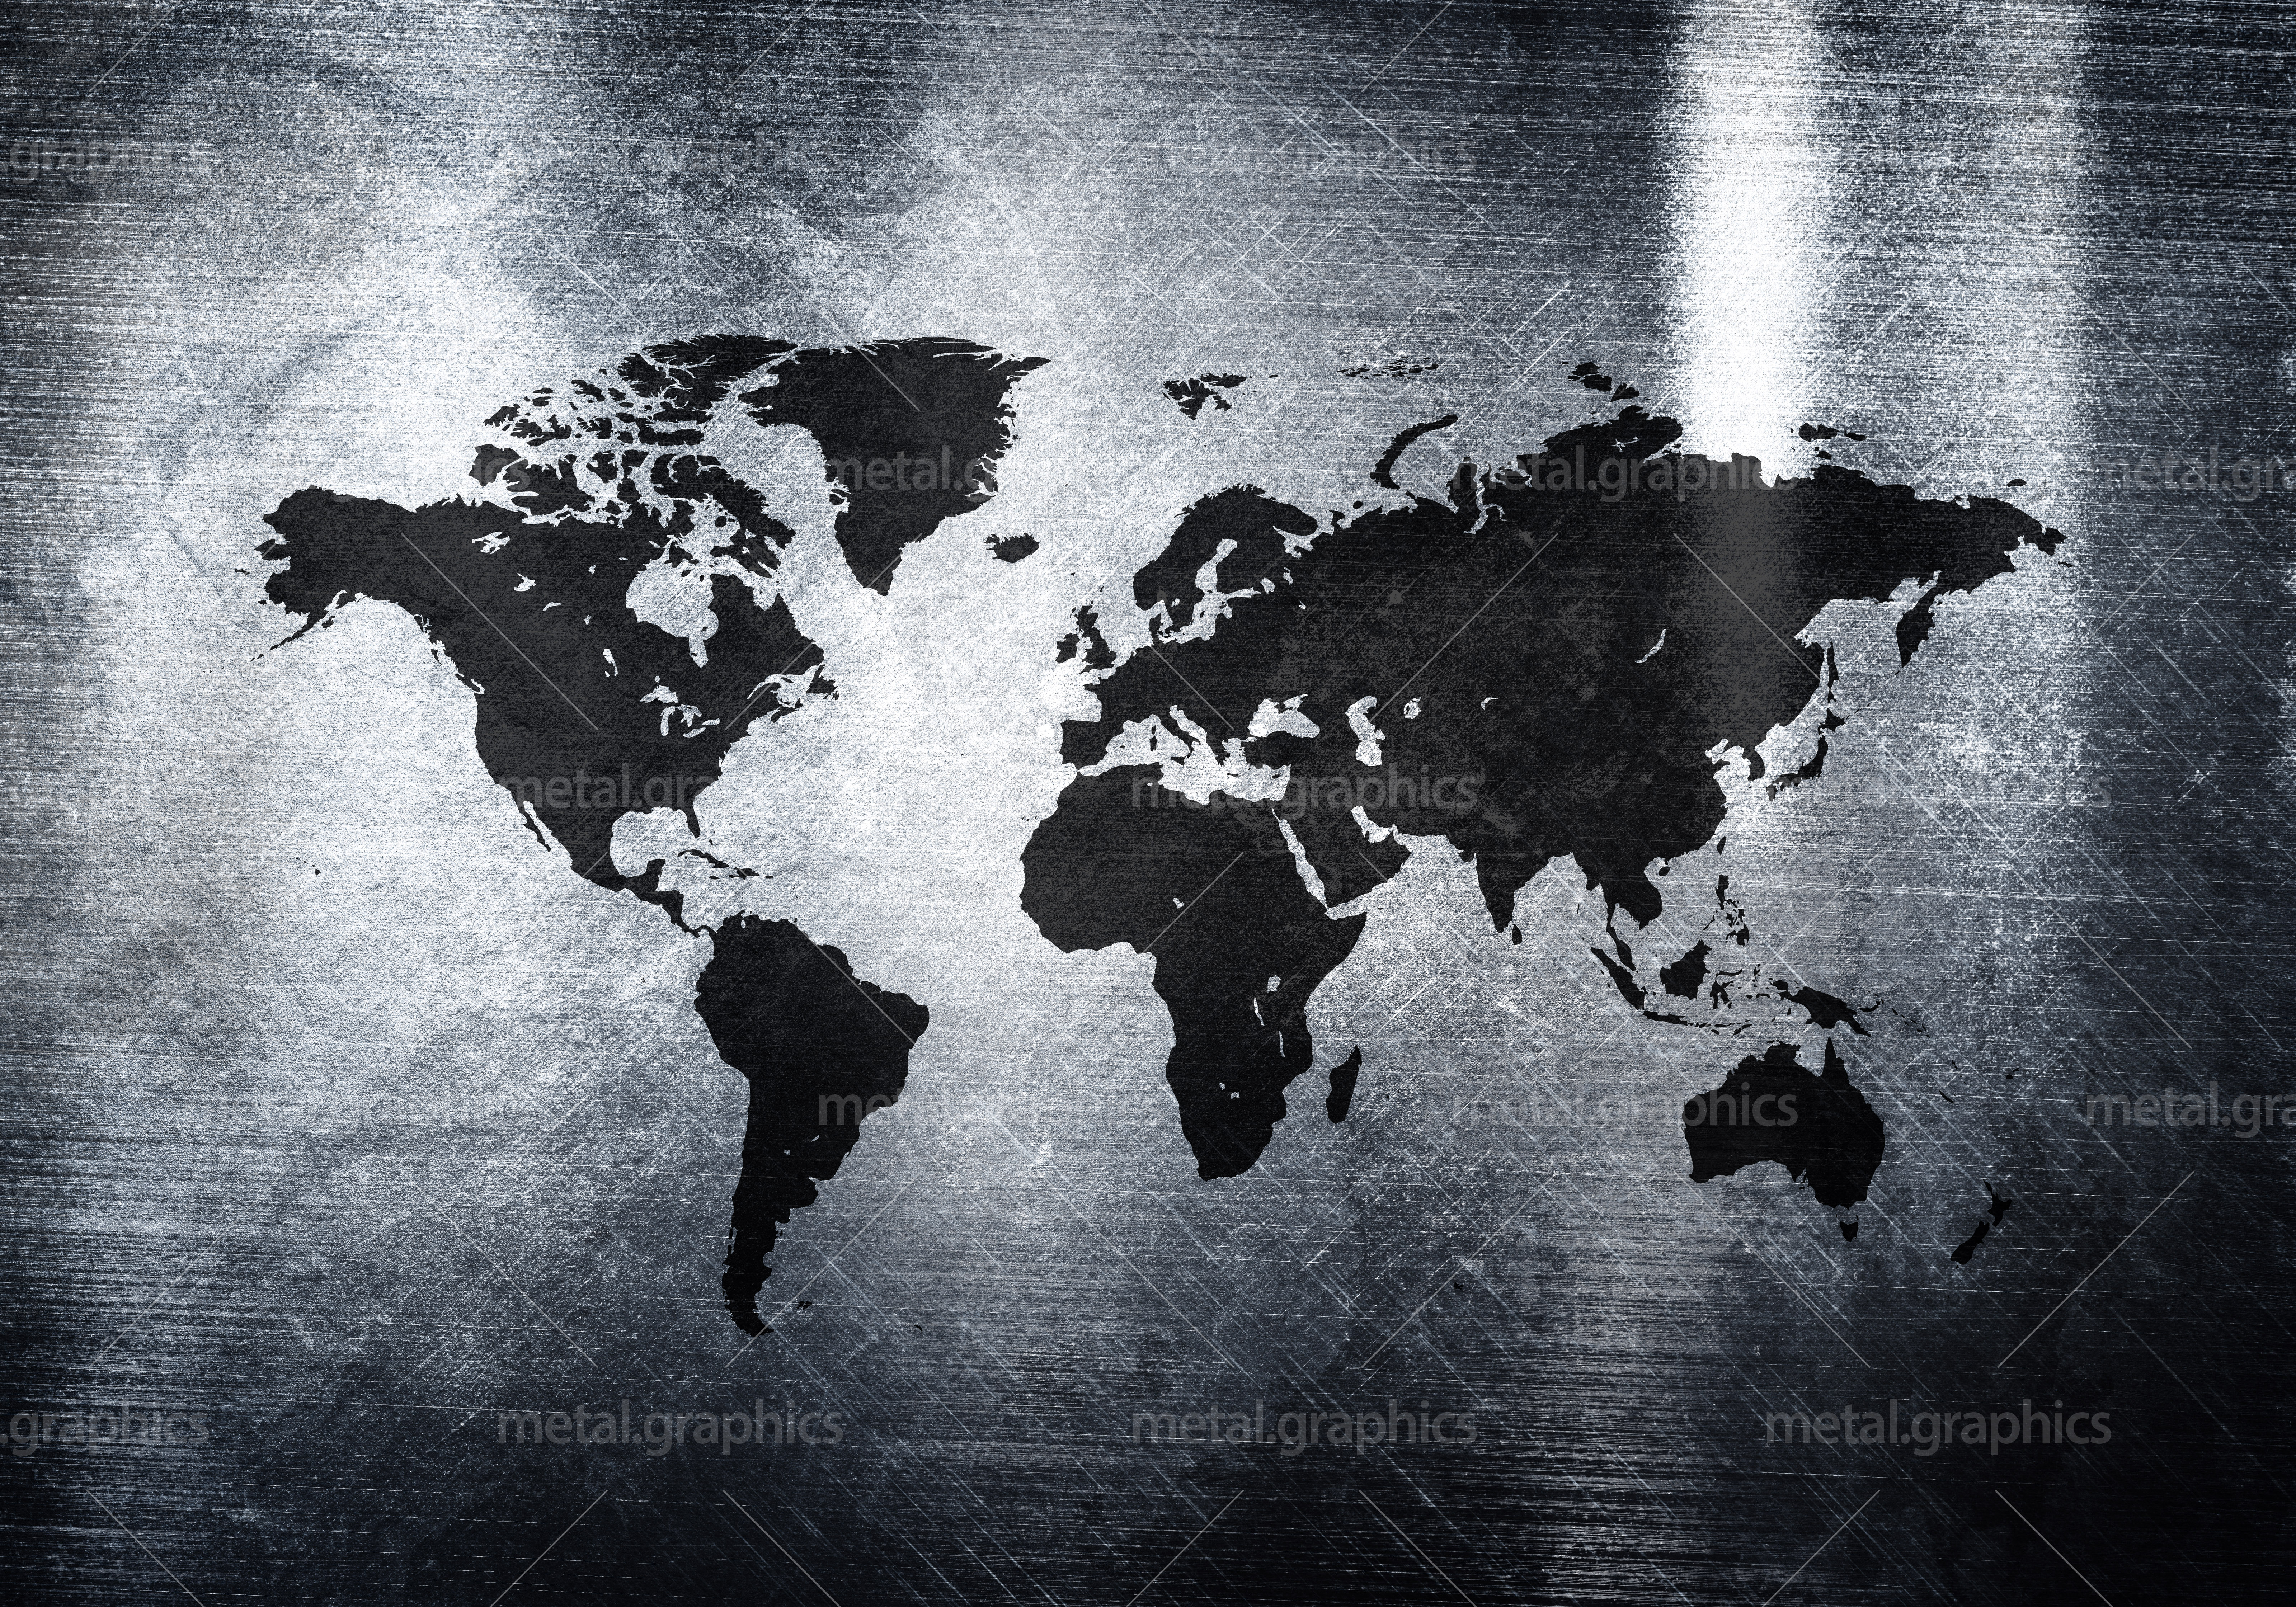 Grunge world map - Metal Graphics